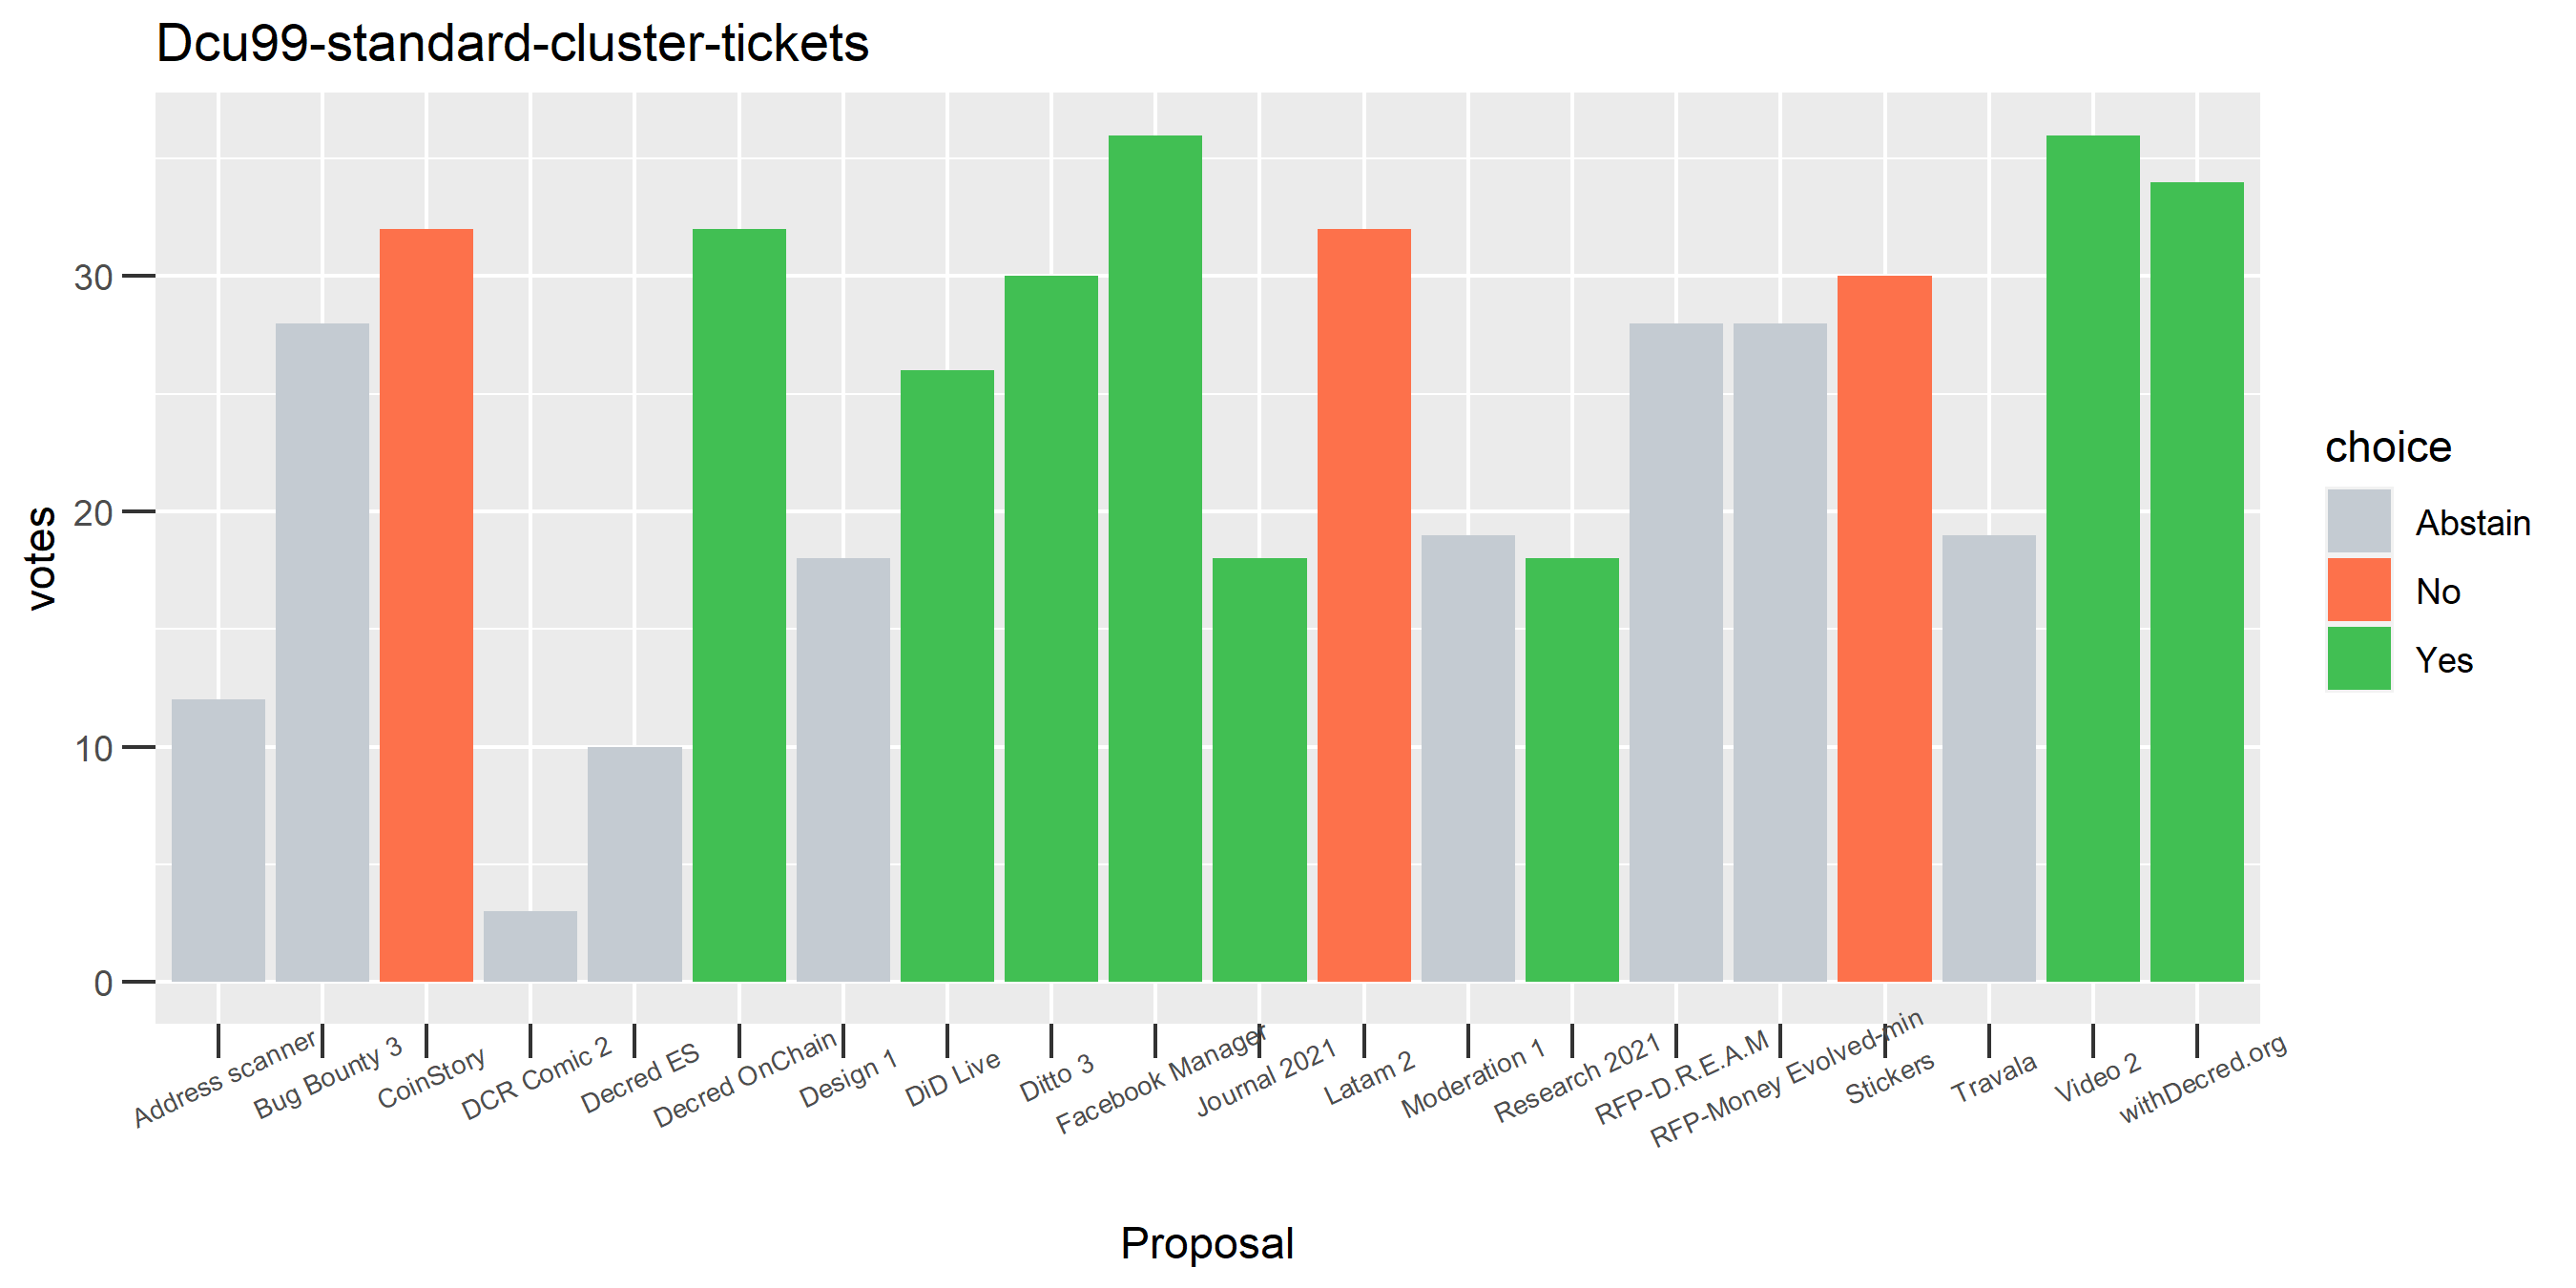 Dcu99-standard-cluster-tickets